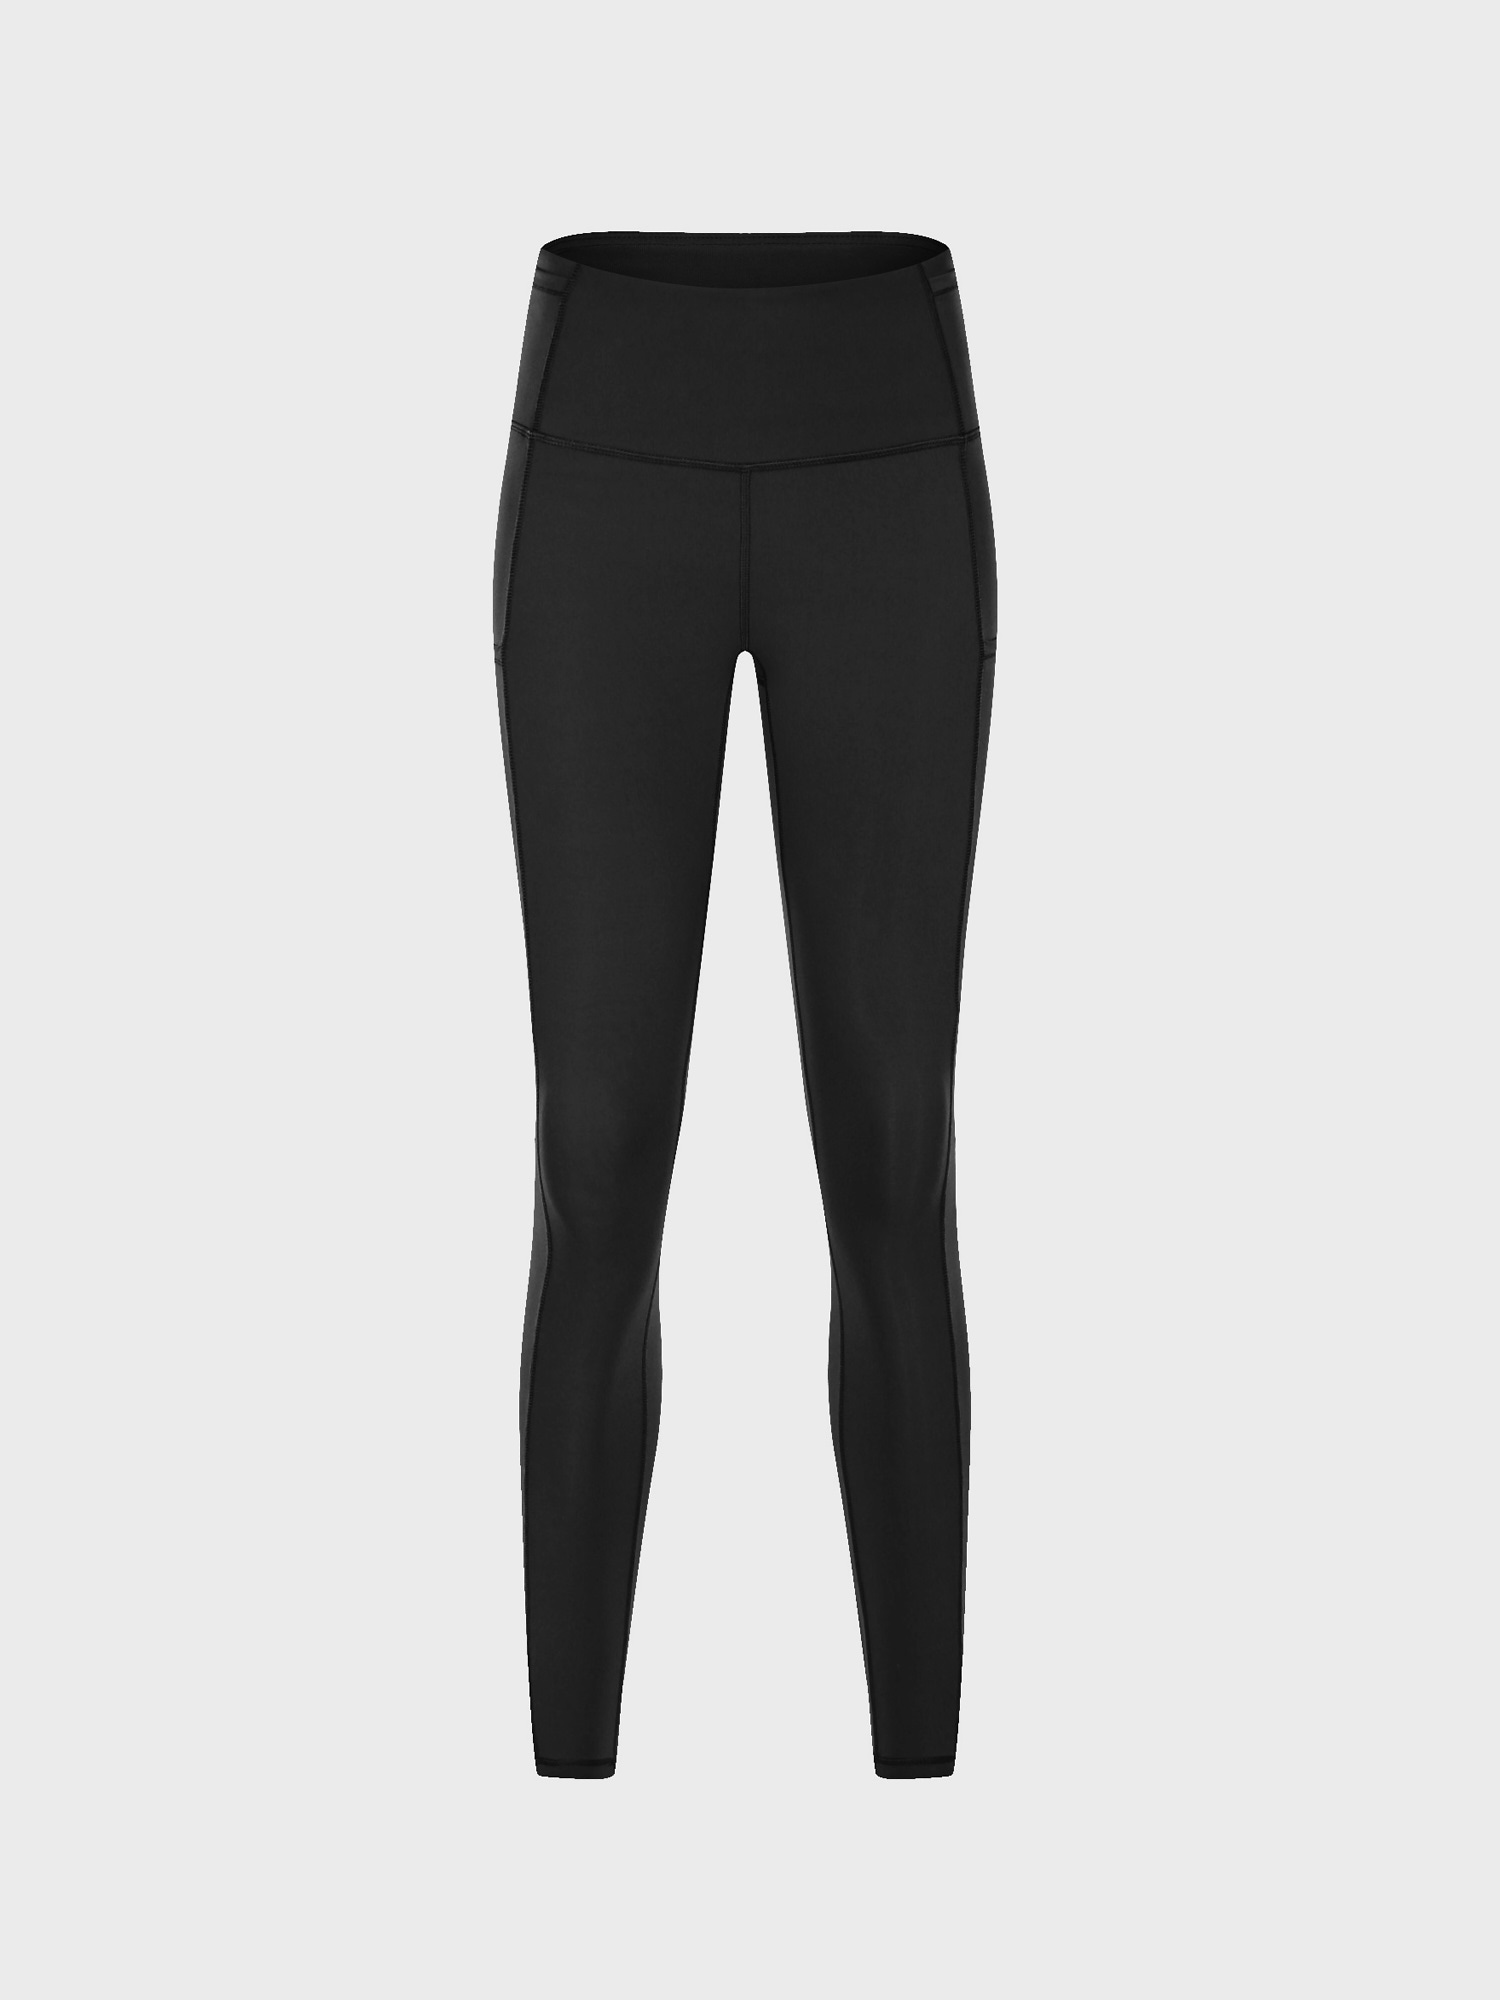 Midsize Stretchy High Waist 9/10 Double Fleece Soft Sports Yoga Leggings with Pockets